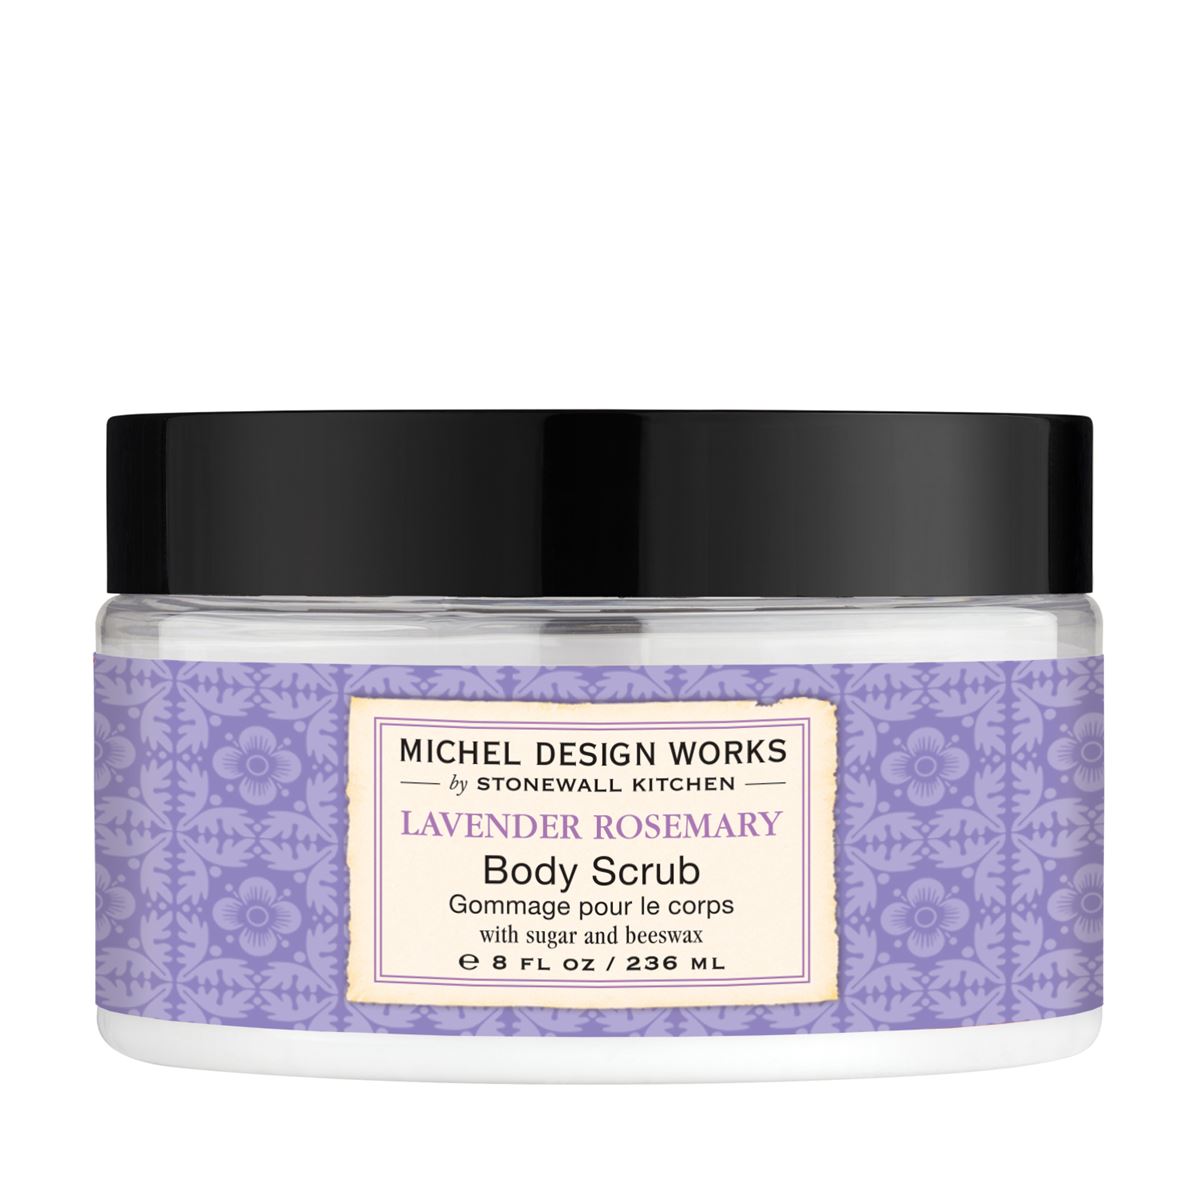 Michel Design Works - Lavender Rosemary Body Scrub